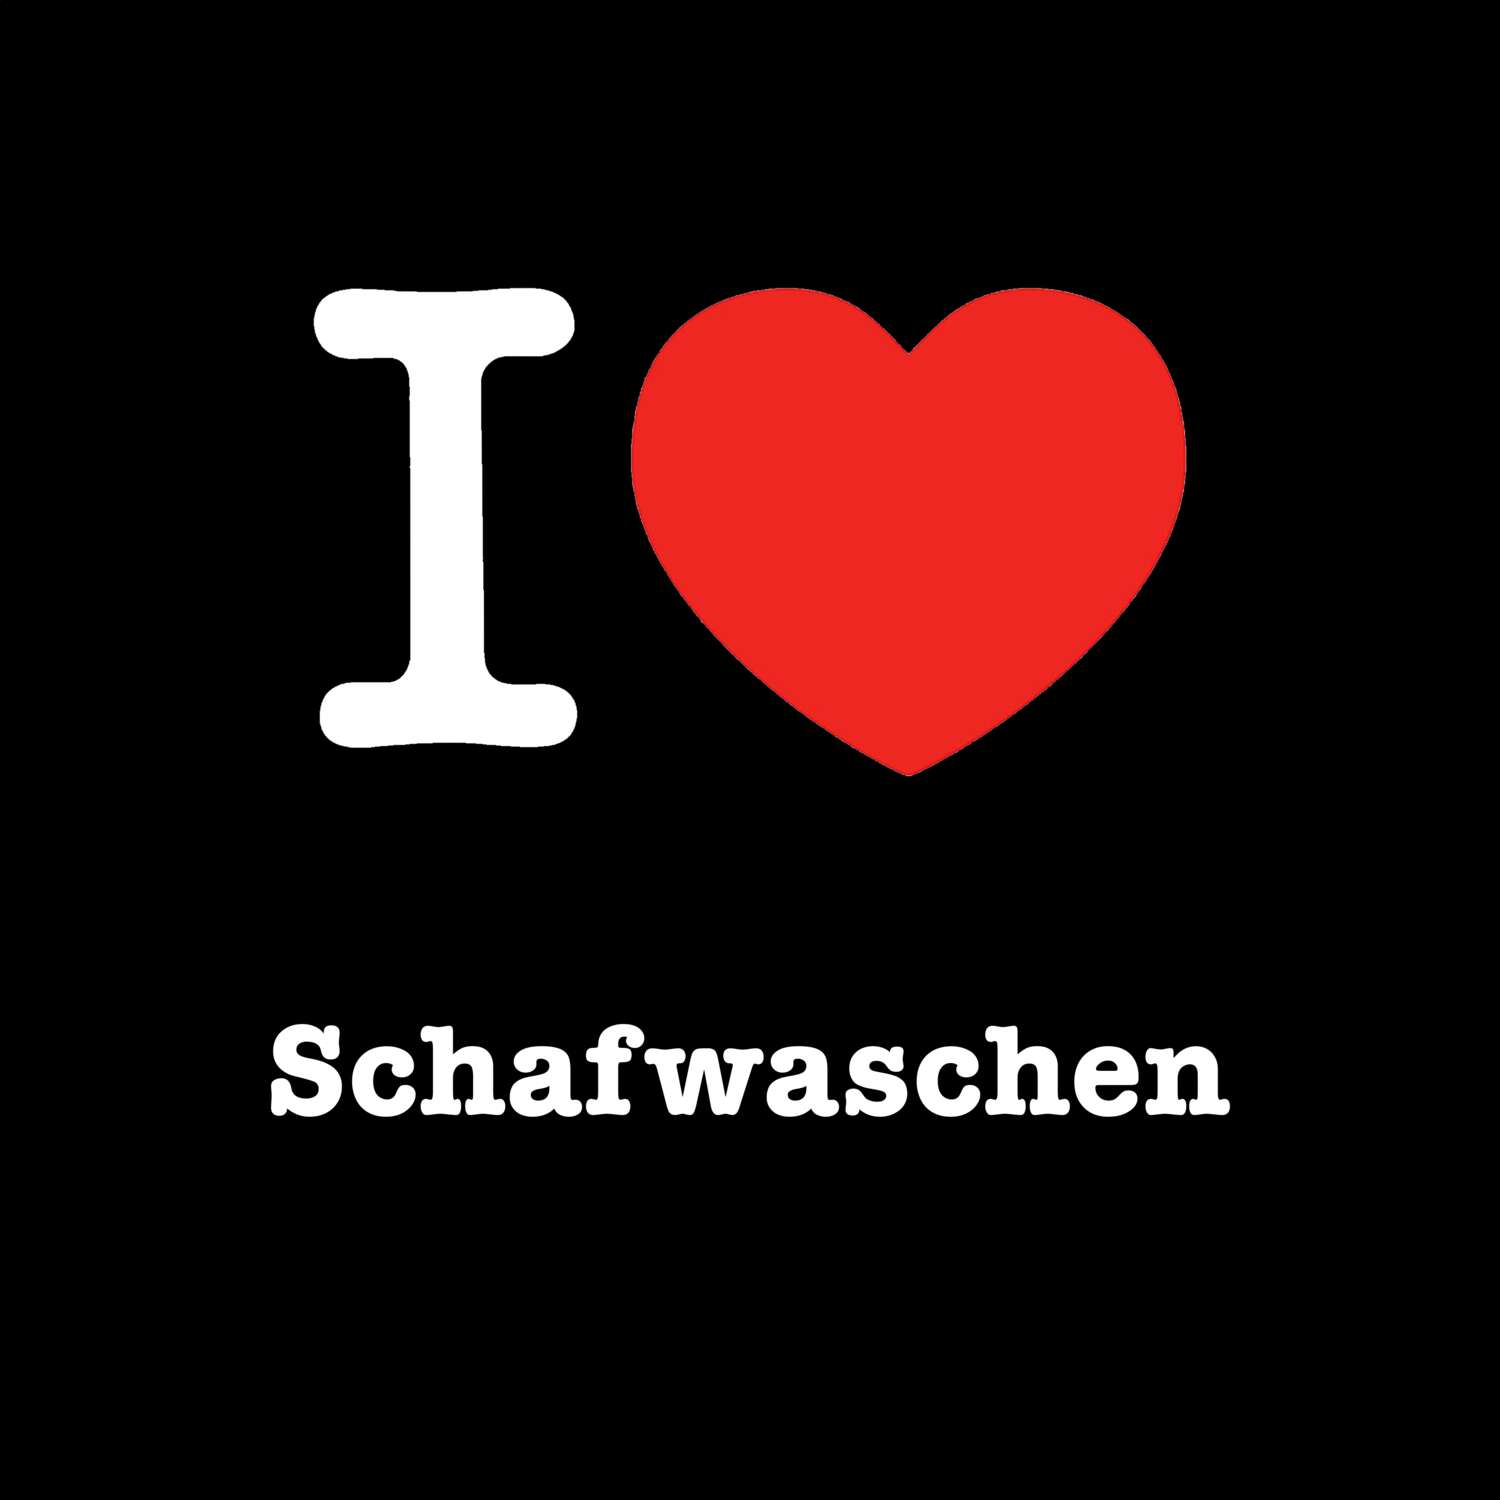 Schafwaschen T-Shirt »I love«